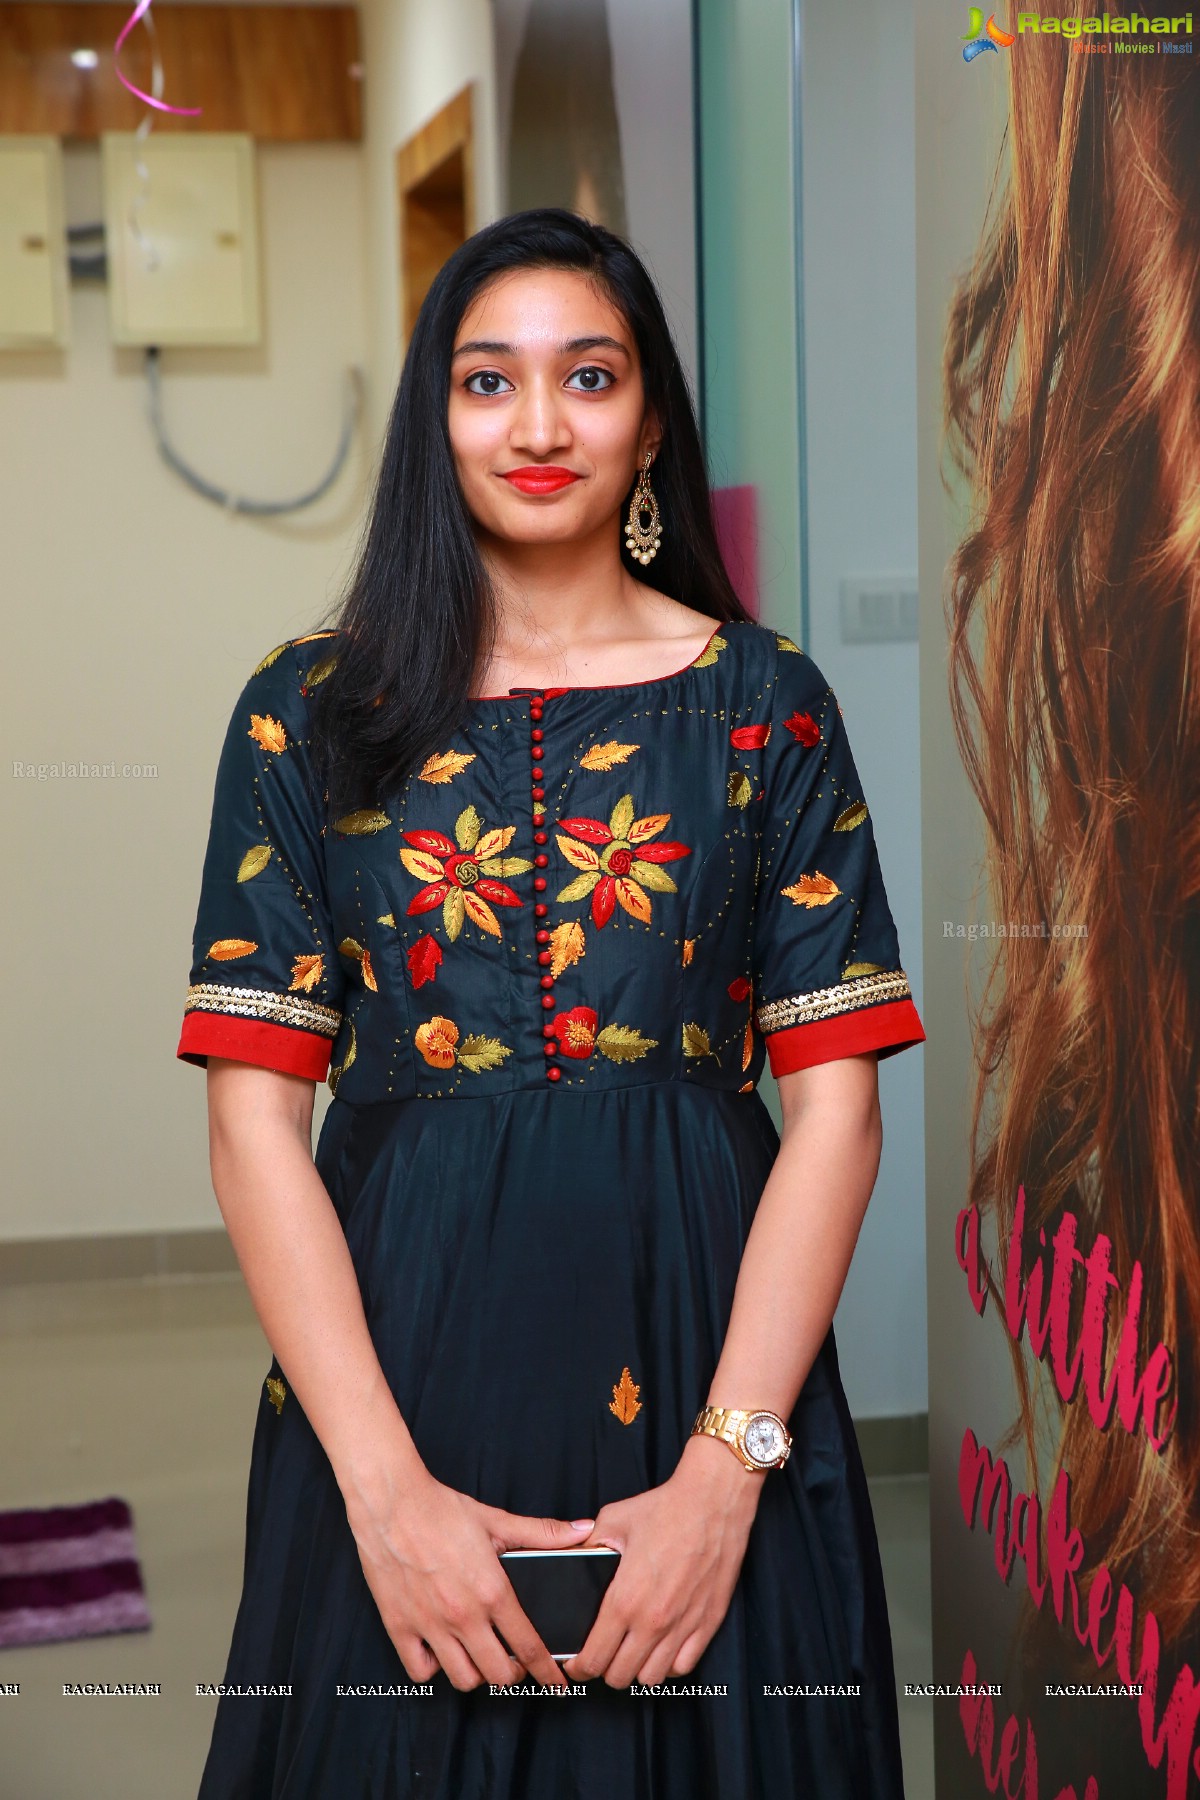 Ritu Varma launches Glam Studios Unisex Beauty Salon, Nizampet